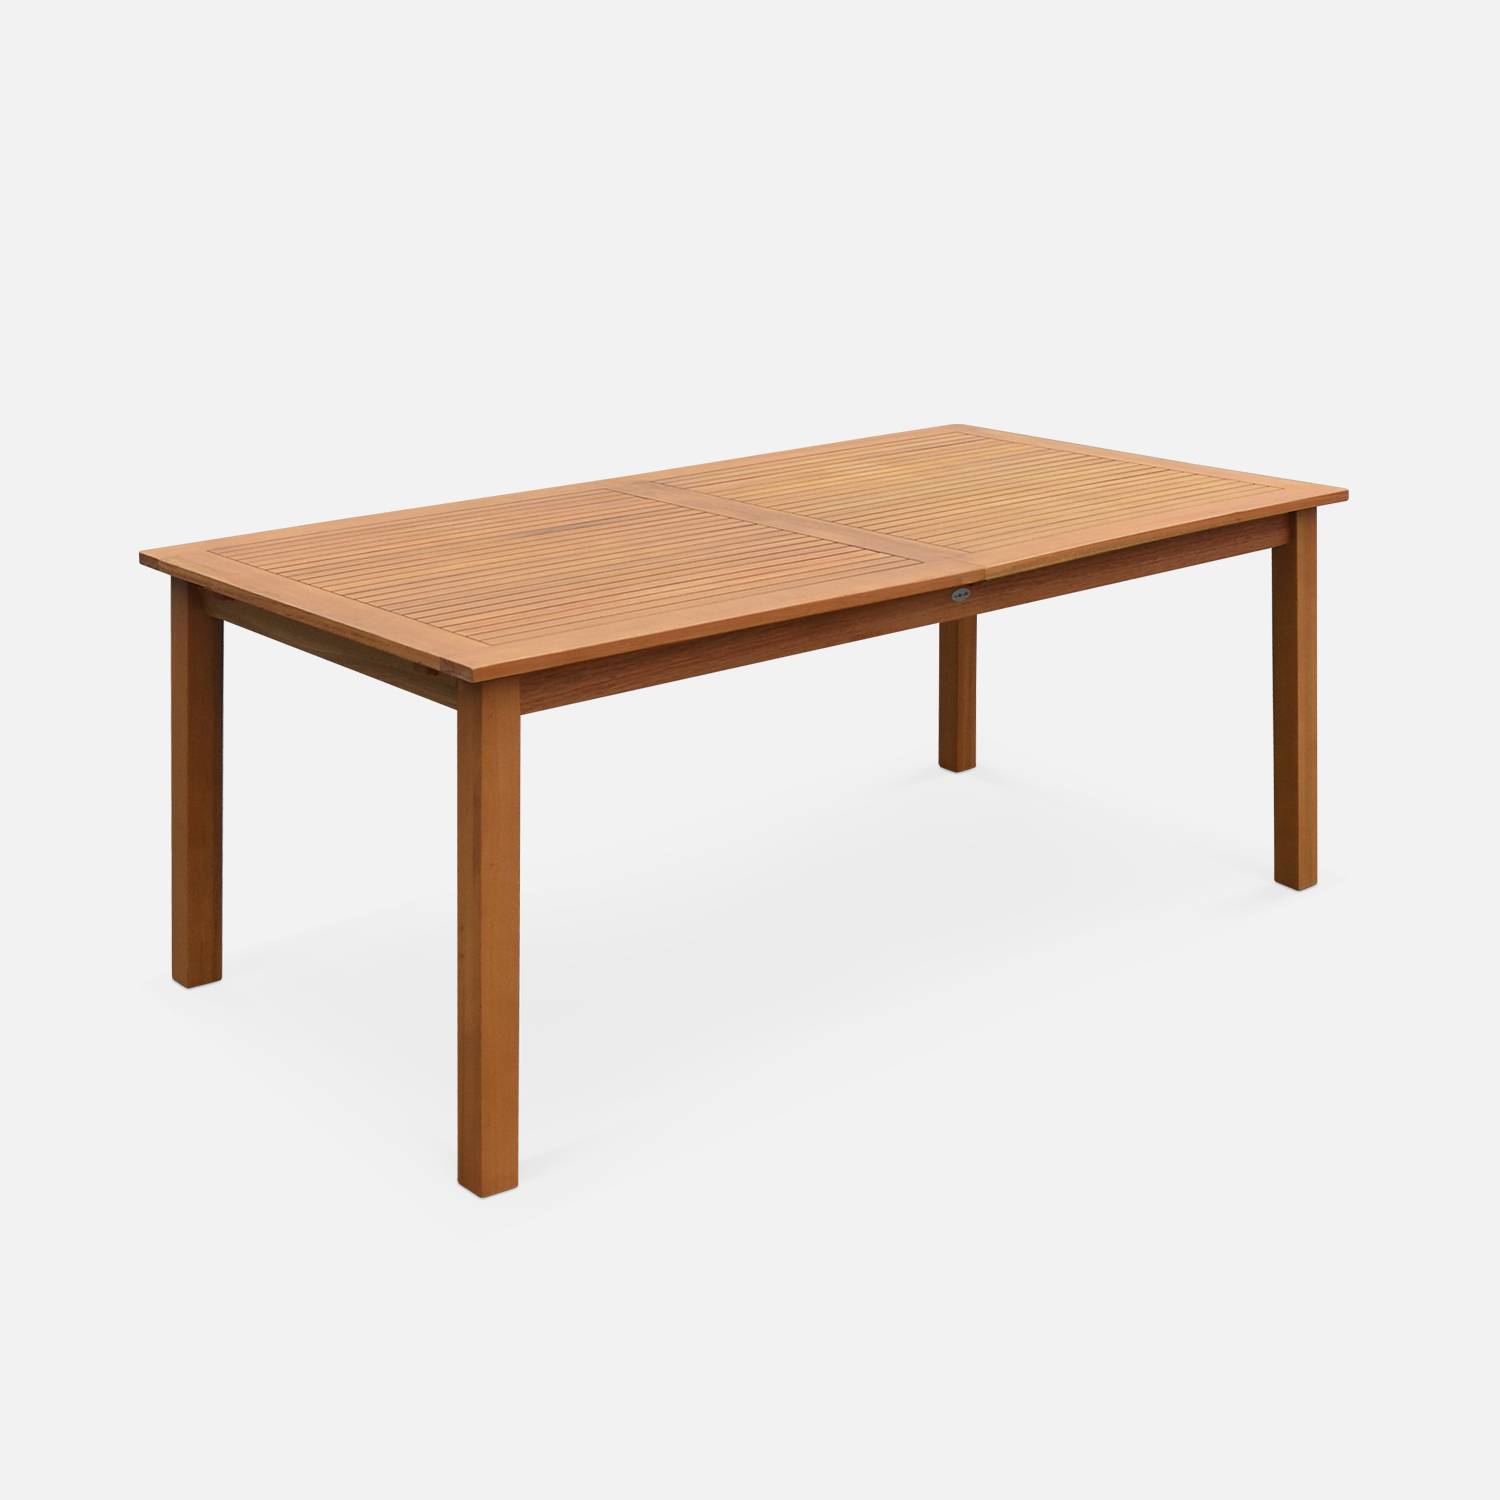 8-seater extendable garden table, natural FSC eucalyptus wood, 180-240cm - Almeria 8 - Wood colour Photo6